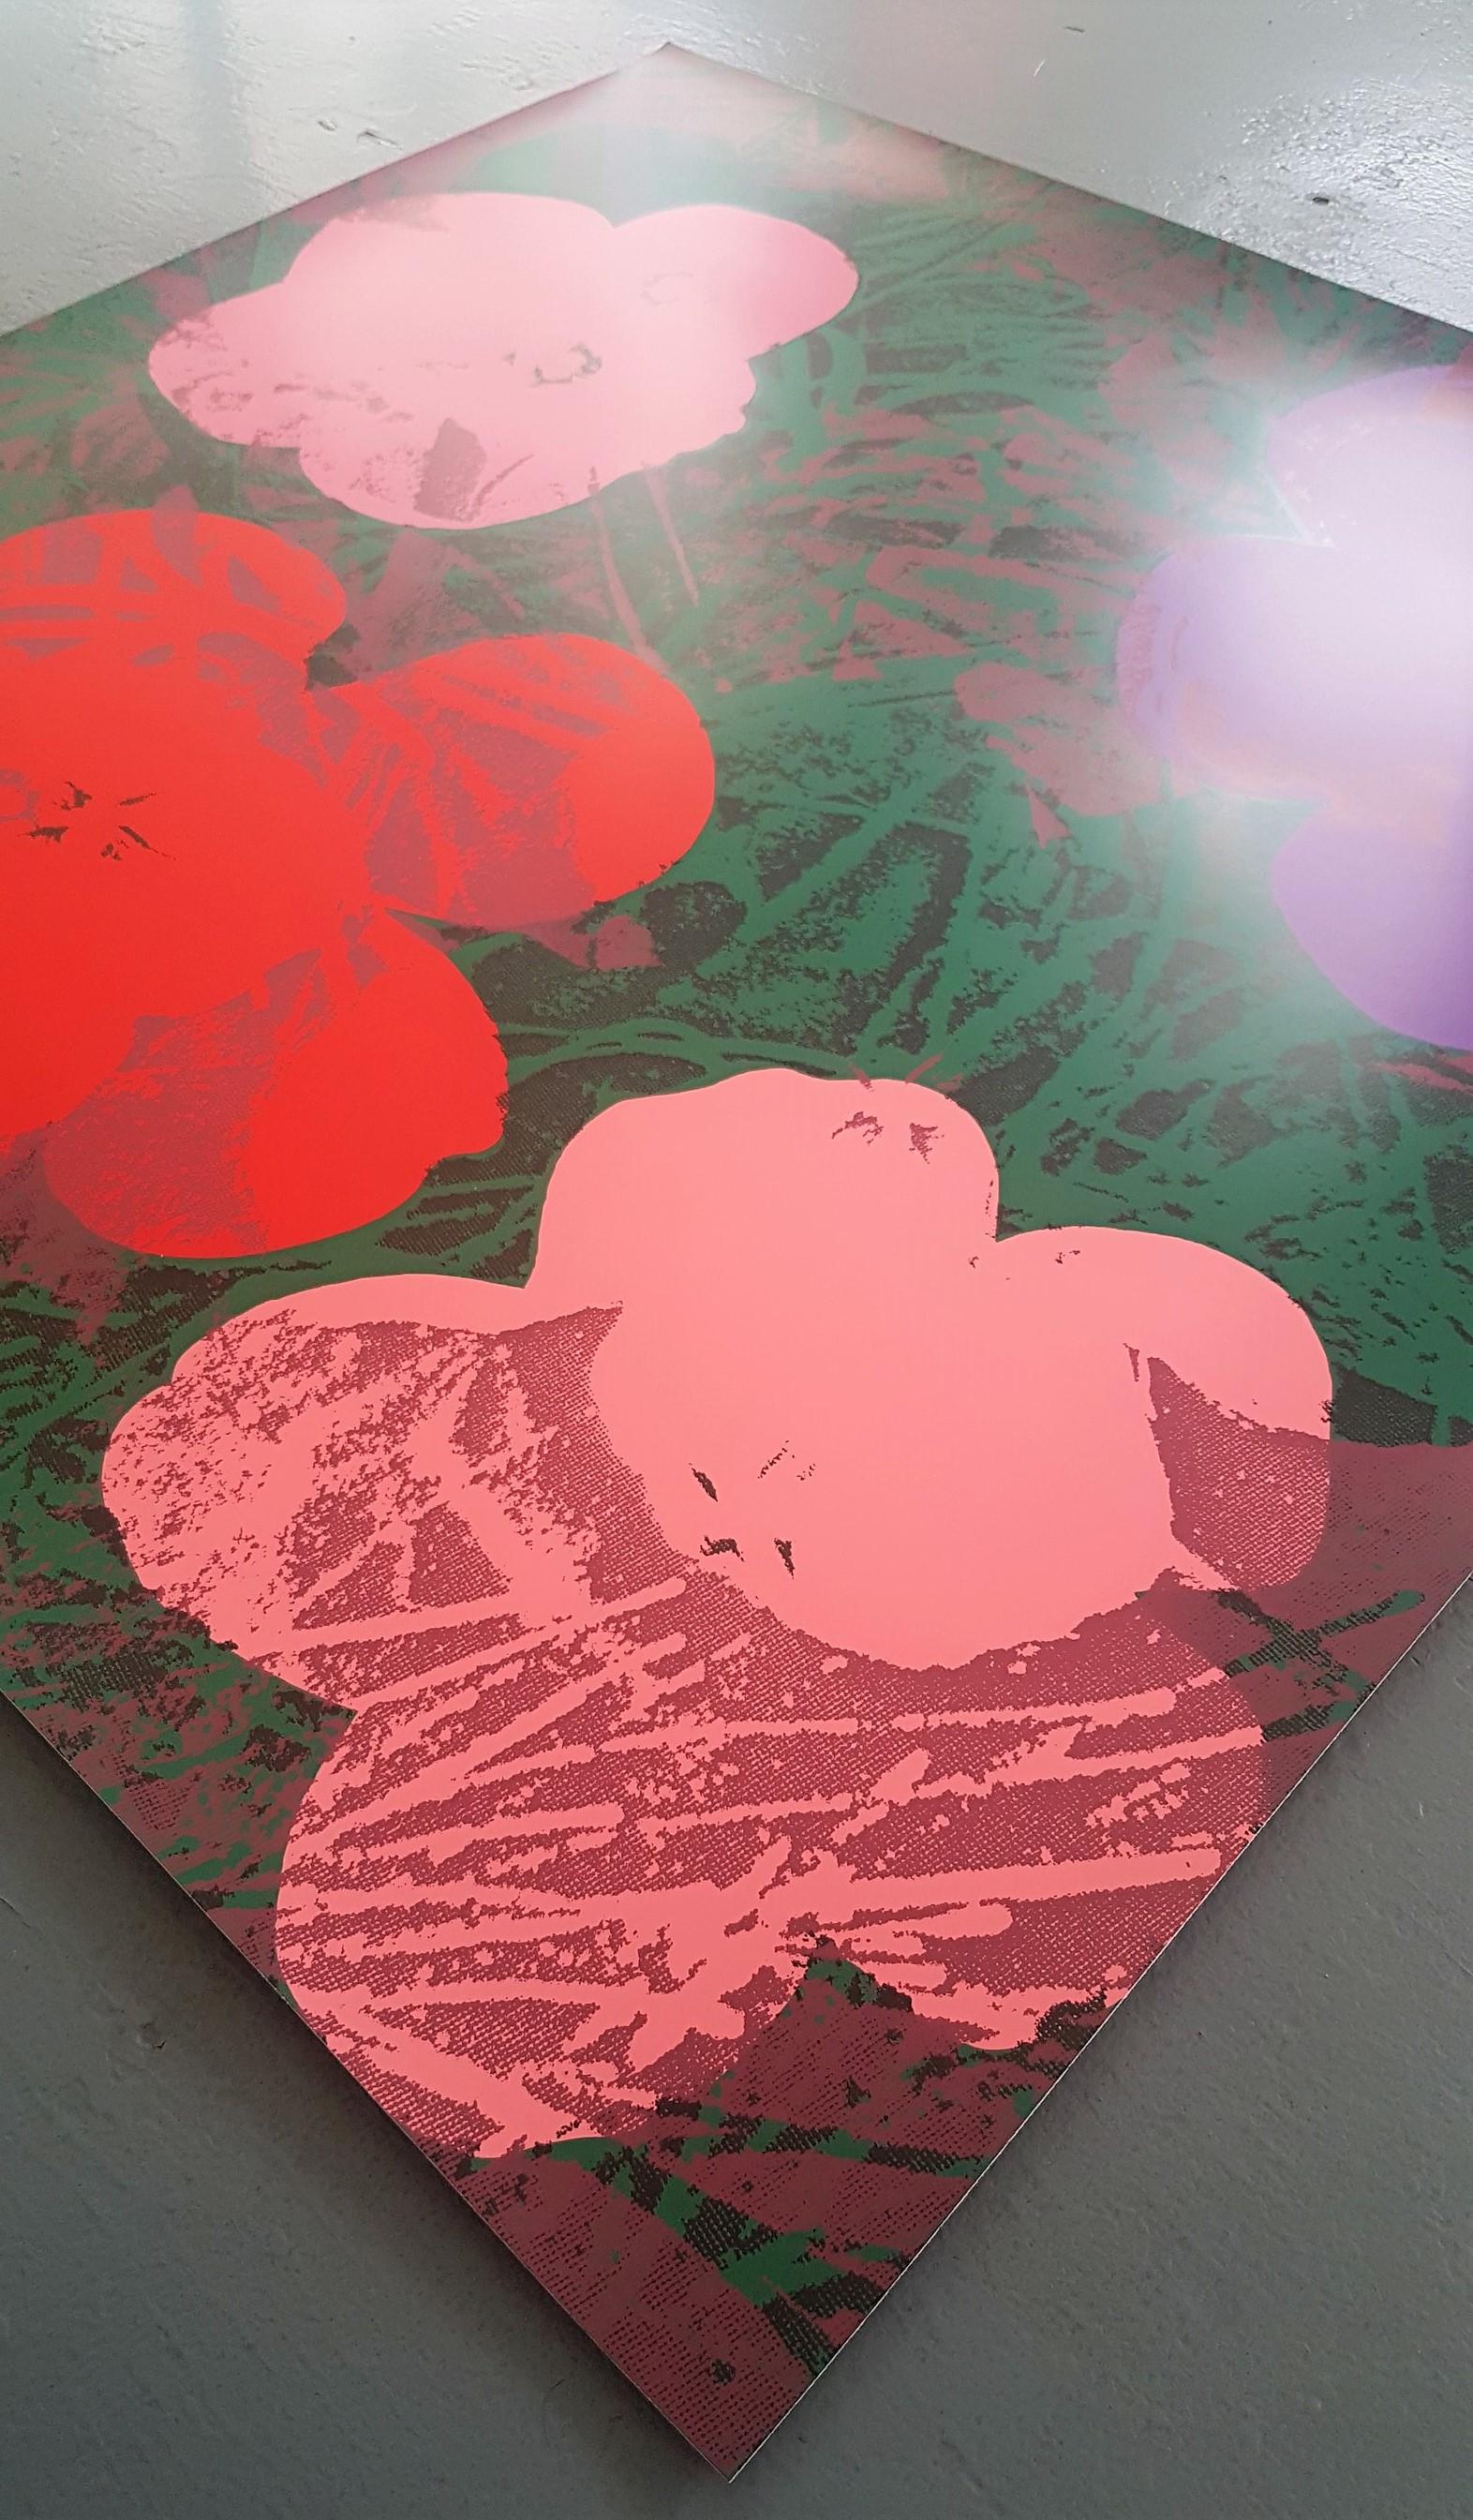 Blumen (Rosa, Rot, Violett, Lila Farbtöne – Pop Art) (~65% OFF-LIST-Preis, SCHLUSSVERKAUFZICHT) (Pop-Art), Print, von Jurgen Kuhl 